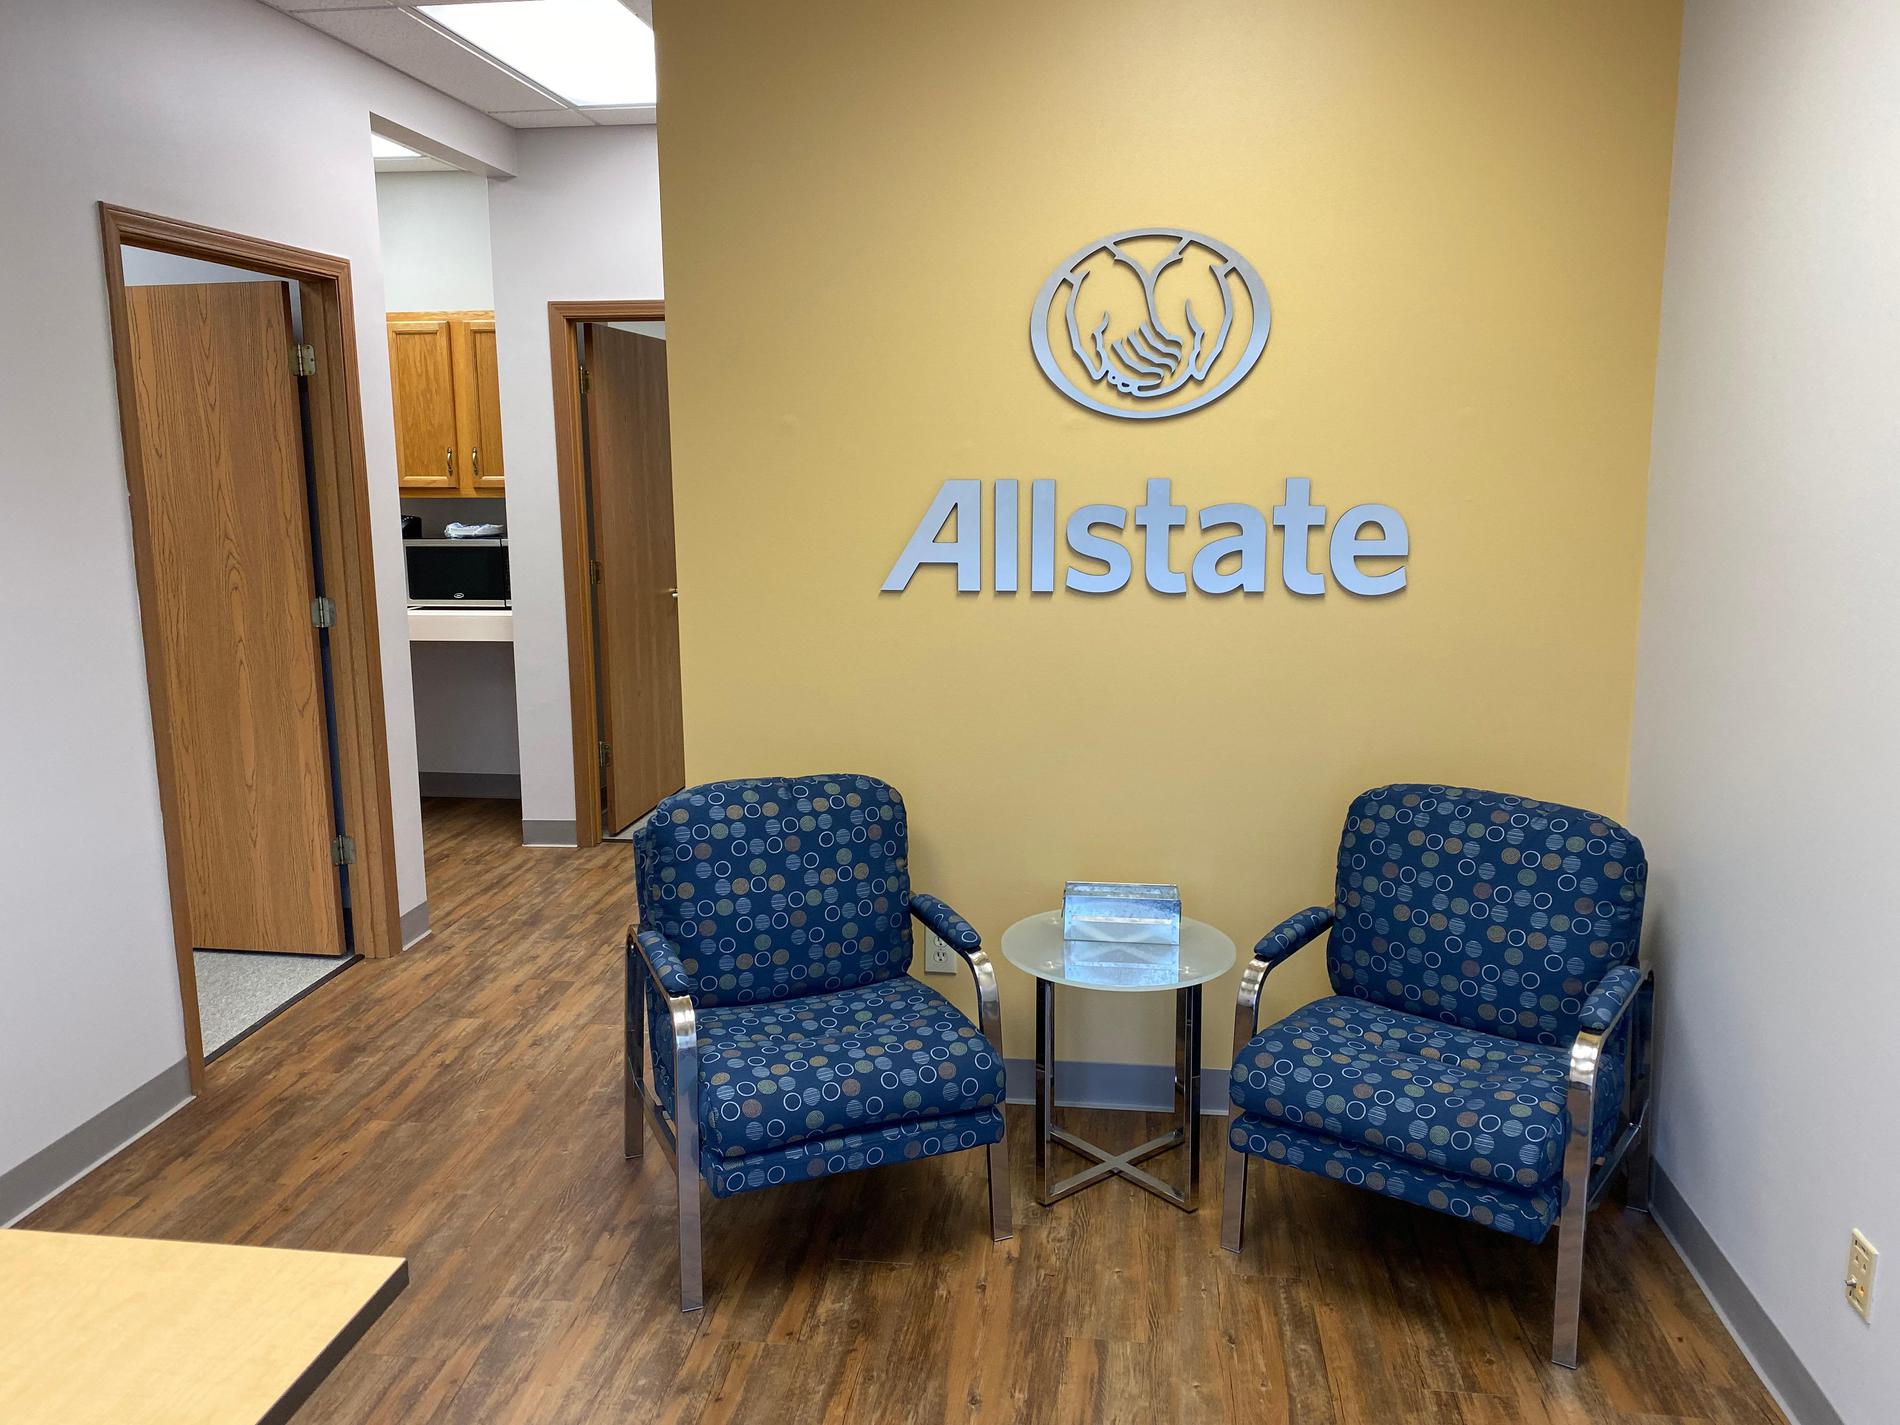 Images Joshua Jennings: Allstate Insurance